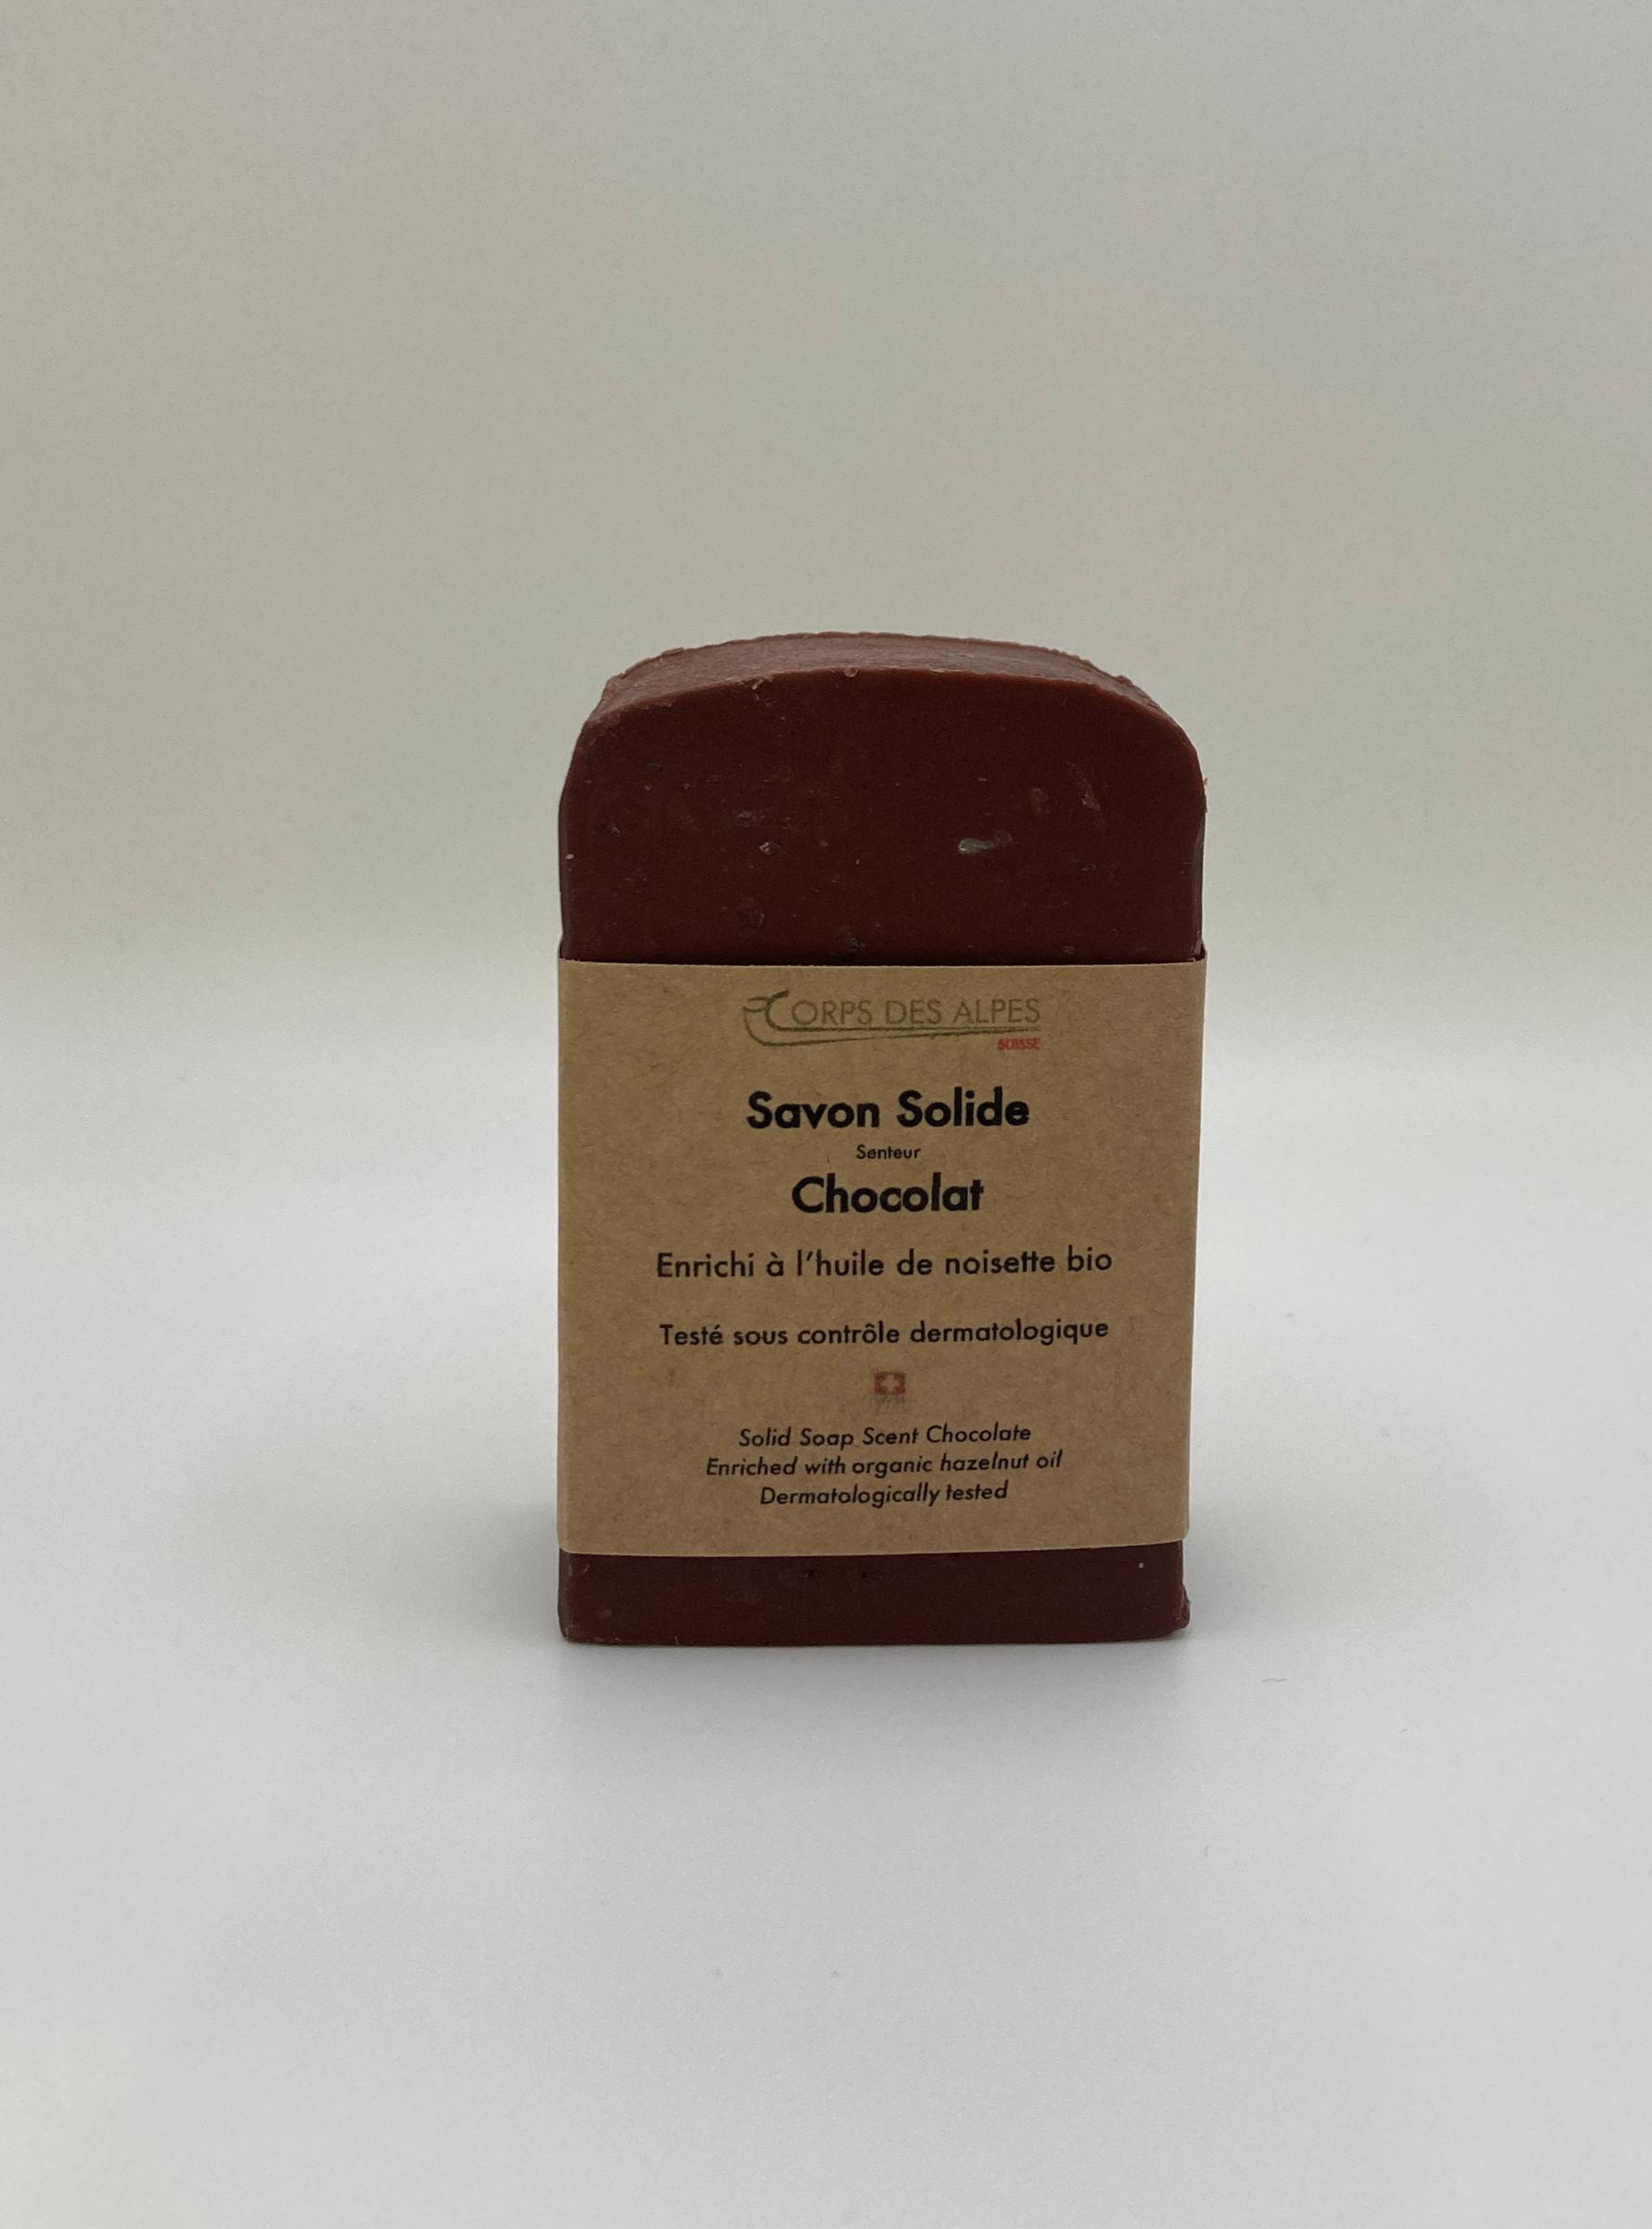 Savon Solide senteur Chocolat, artisanal product for direct sale in Switzerland